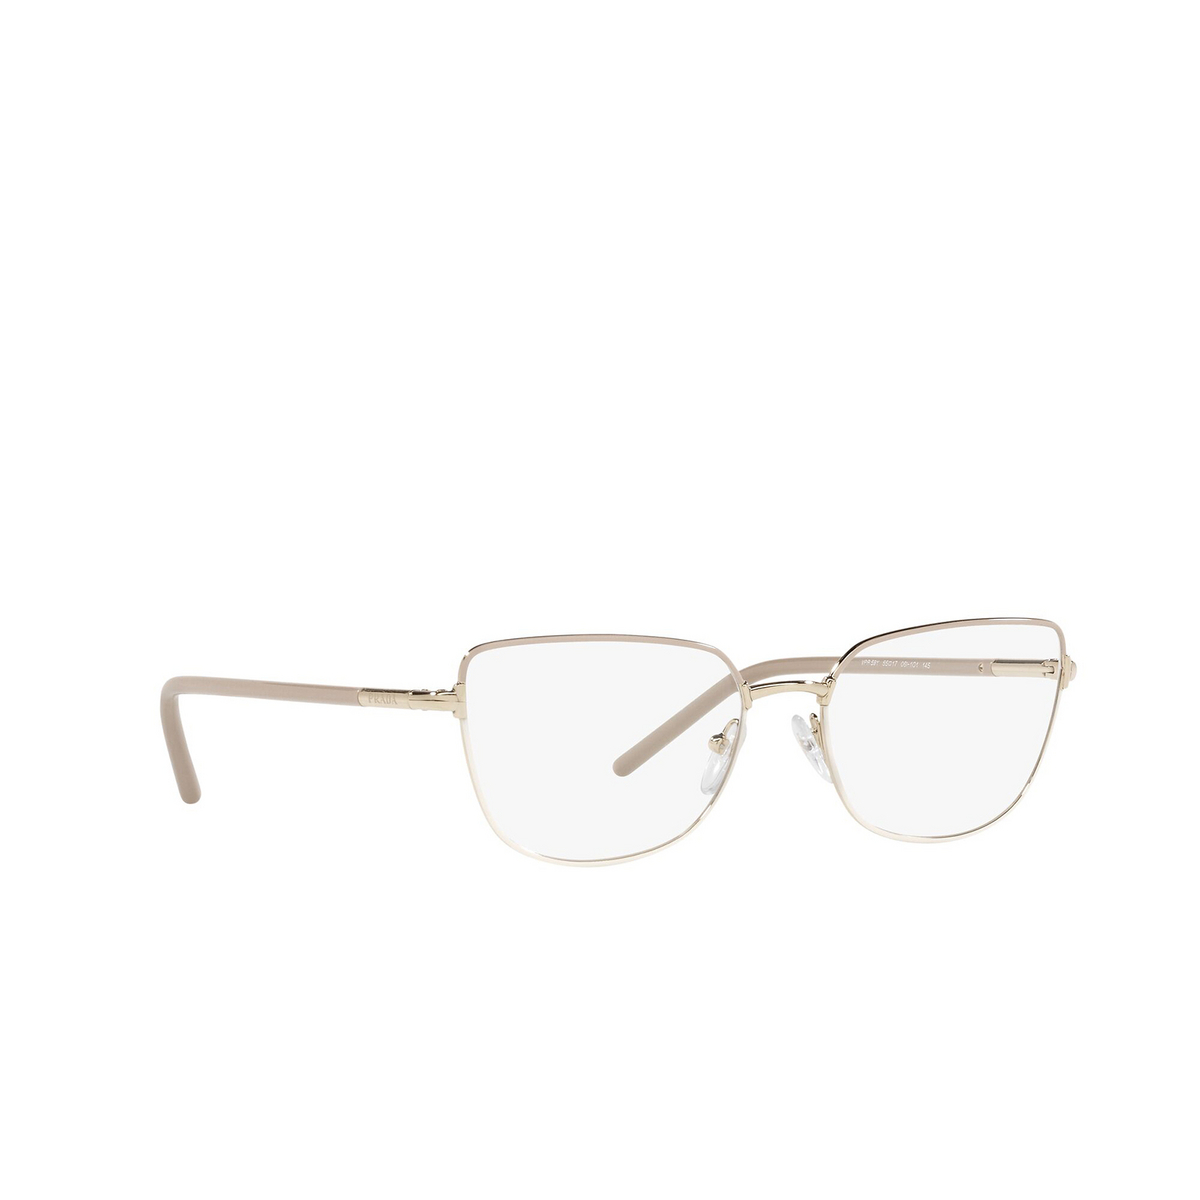 Prada® Butterfly Eyeglasses: PR 59YV color Pale Gold ZVN1O1 - three-quarters view.